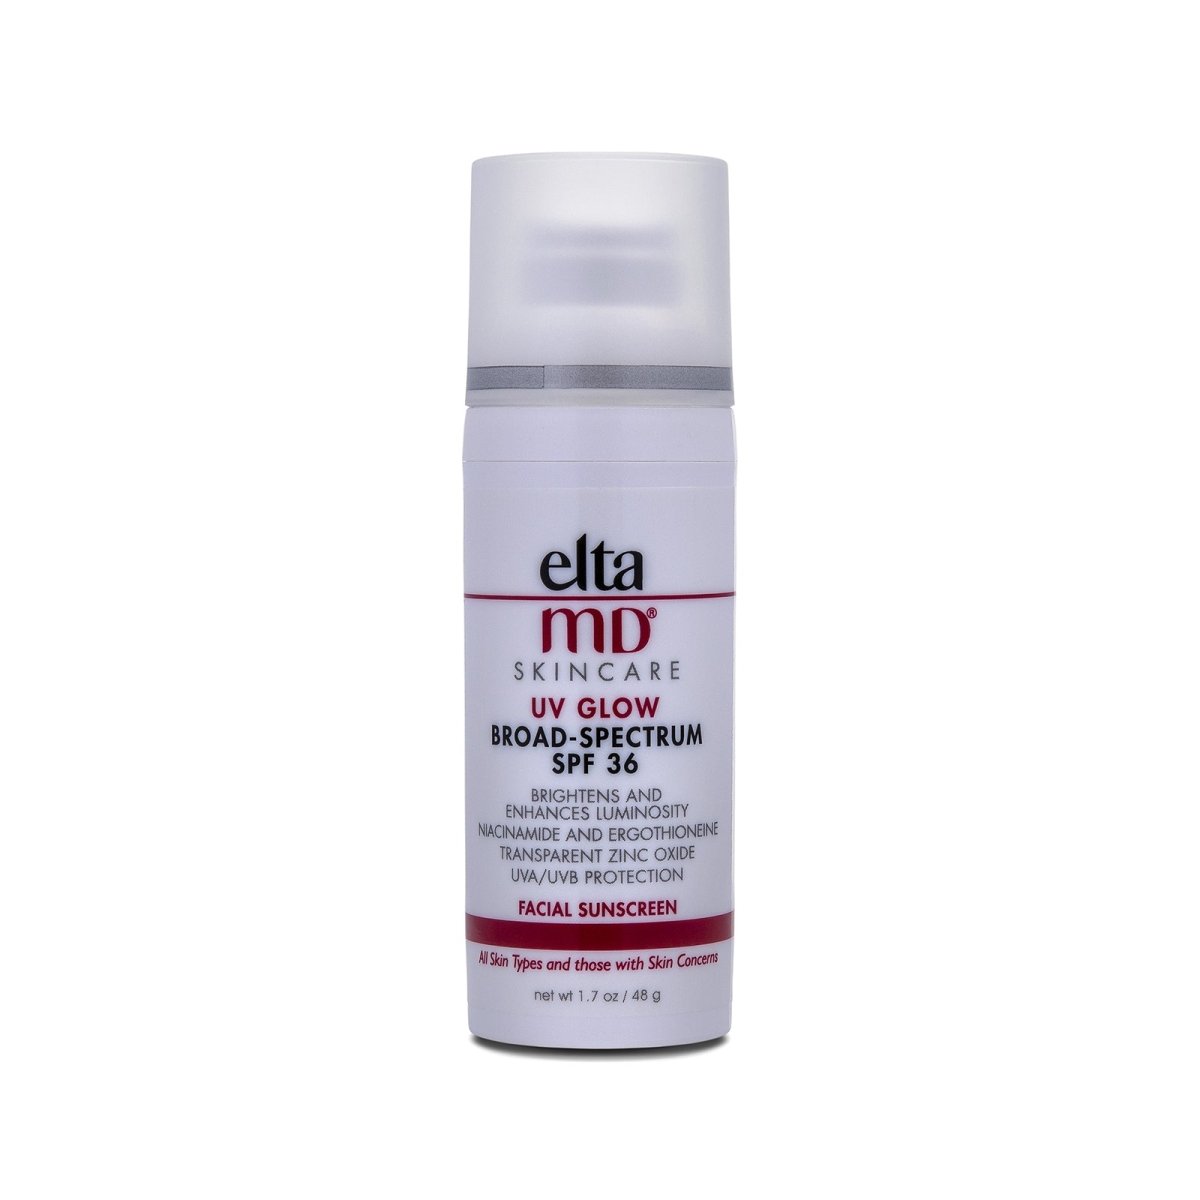 EltaMD UV Glow SPF 36 Sunscreen Moisturizer 1.7 oz - SkincareEssentials